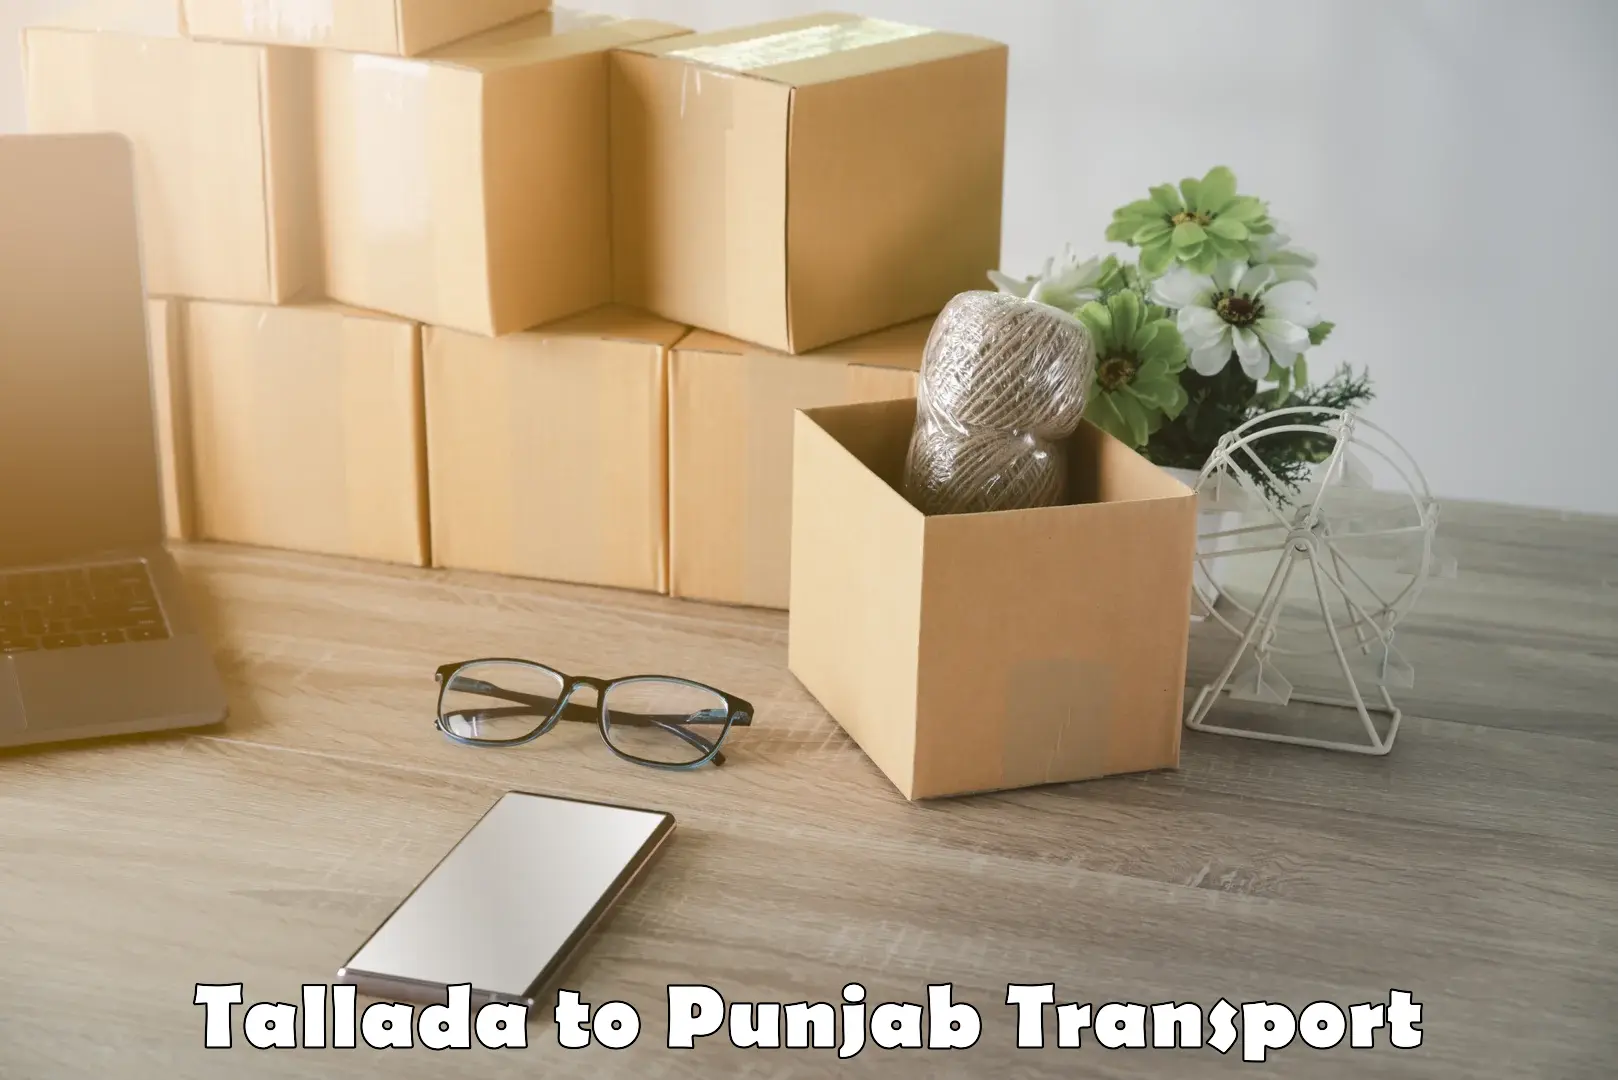 Furniture transport service Tallada to Punjab